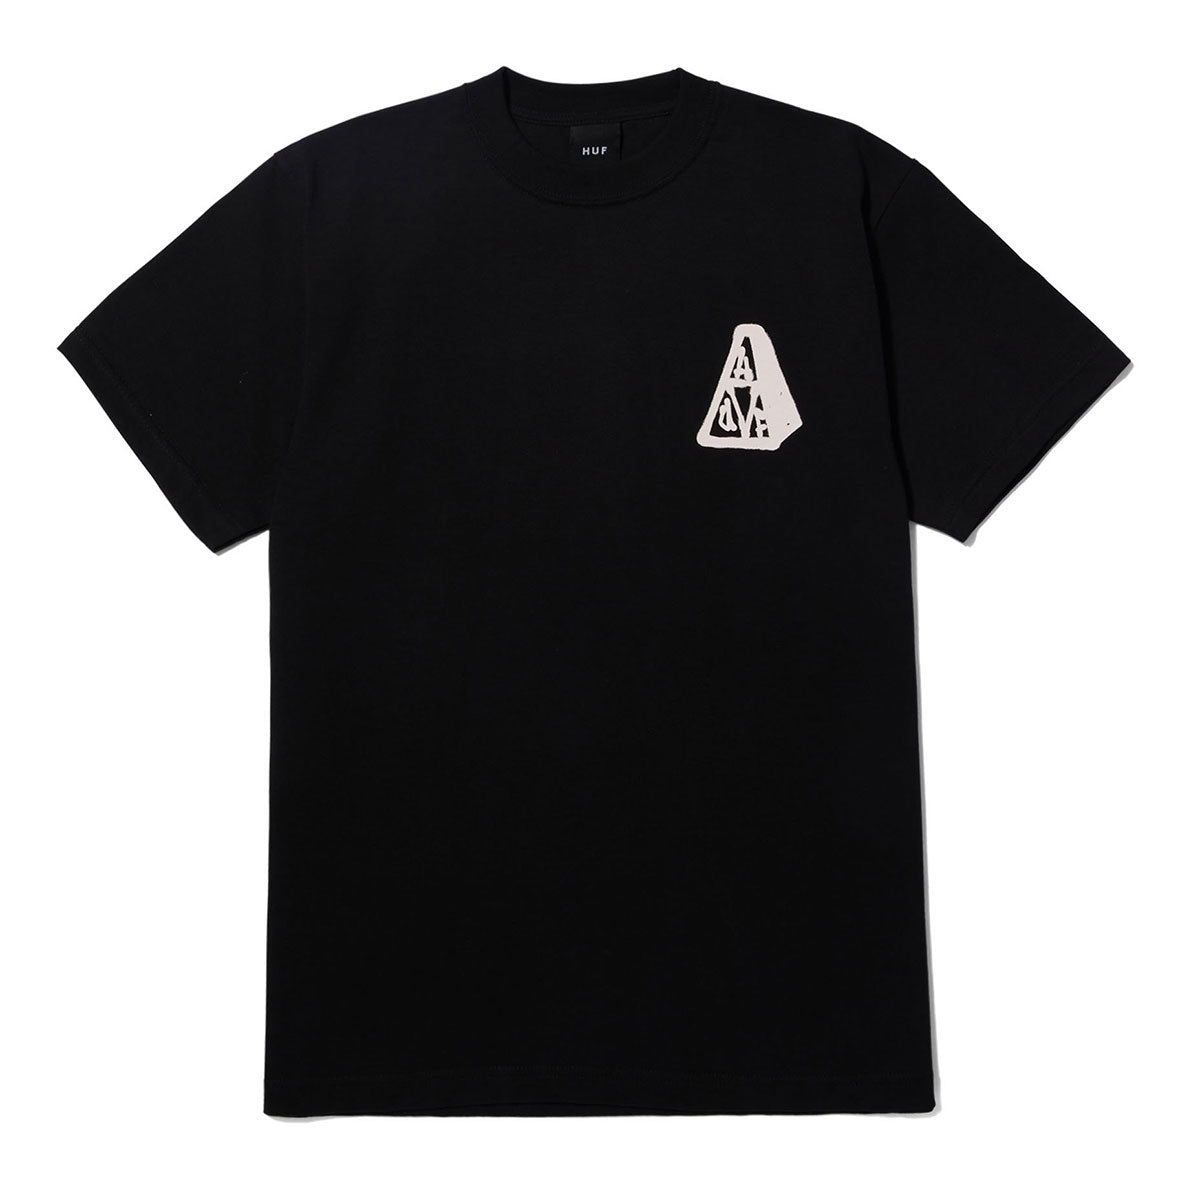 HUF Tt Hallows T-Shirt - Black image 1